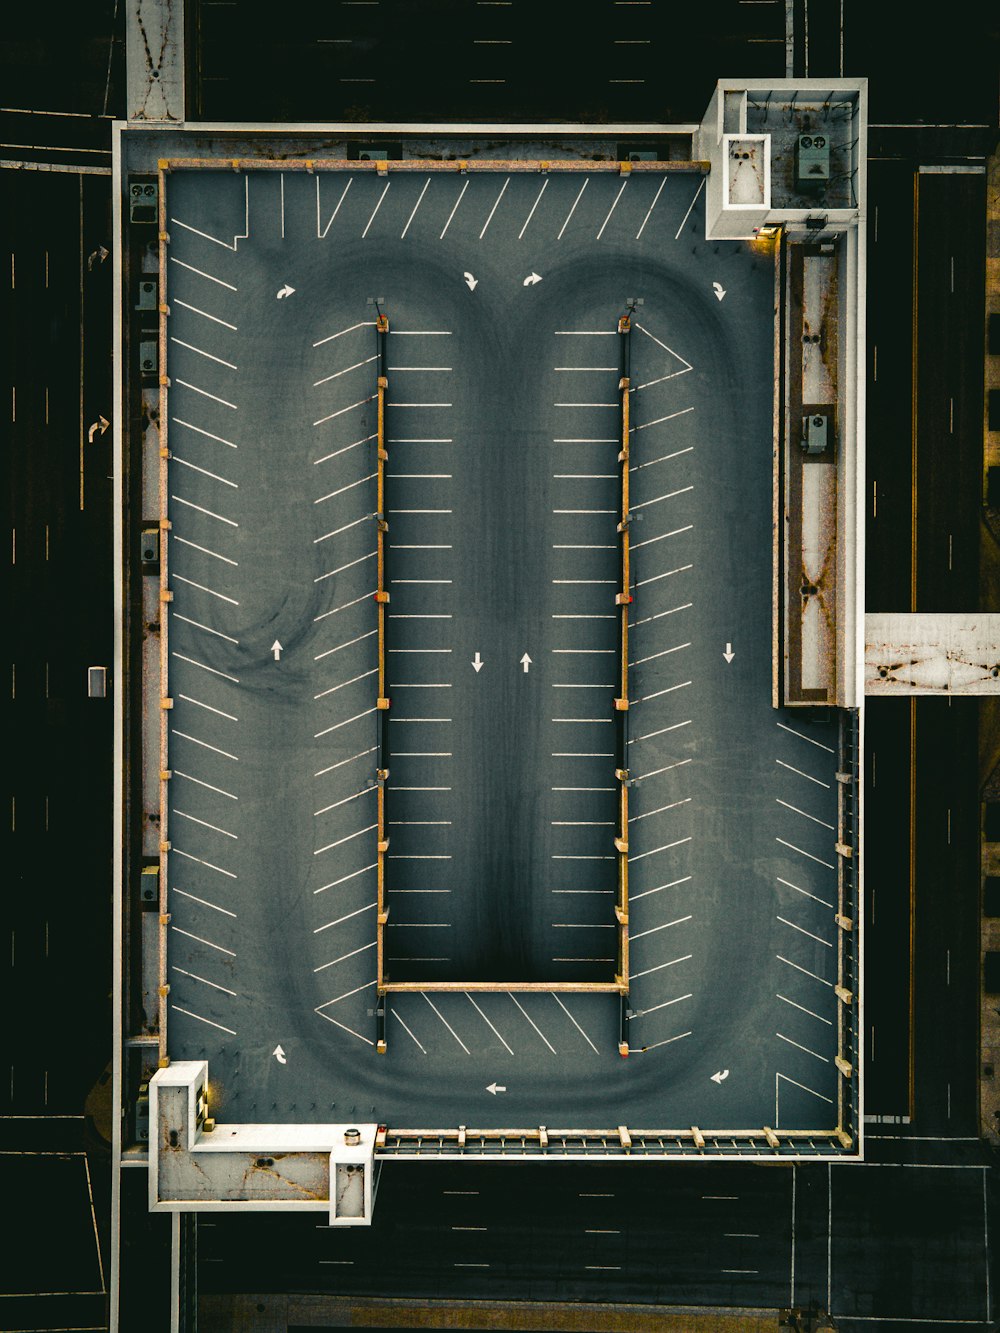 an overhead view of an empty parking lot